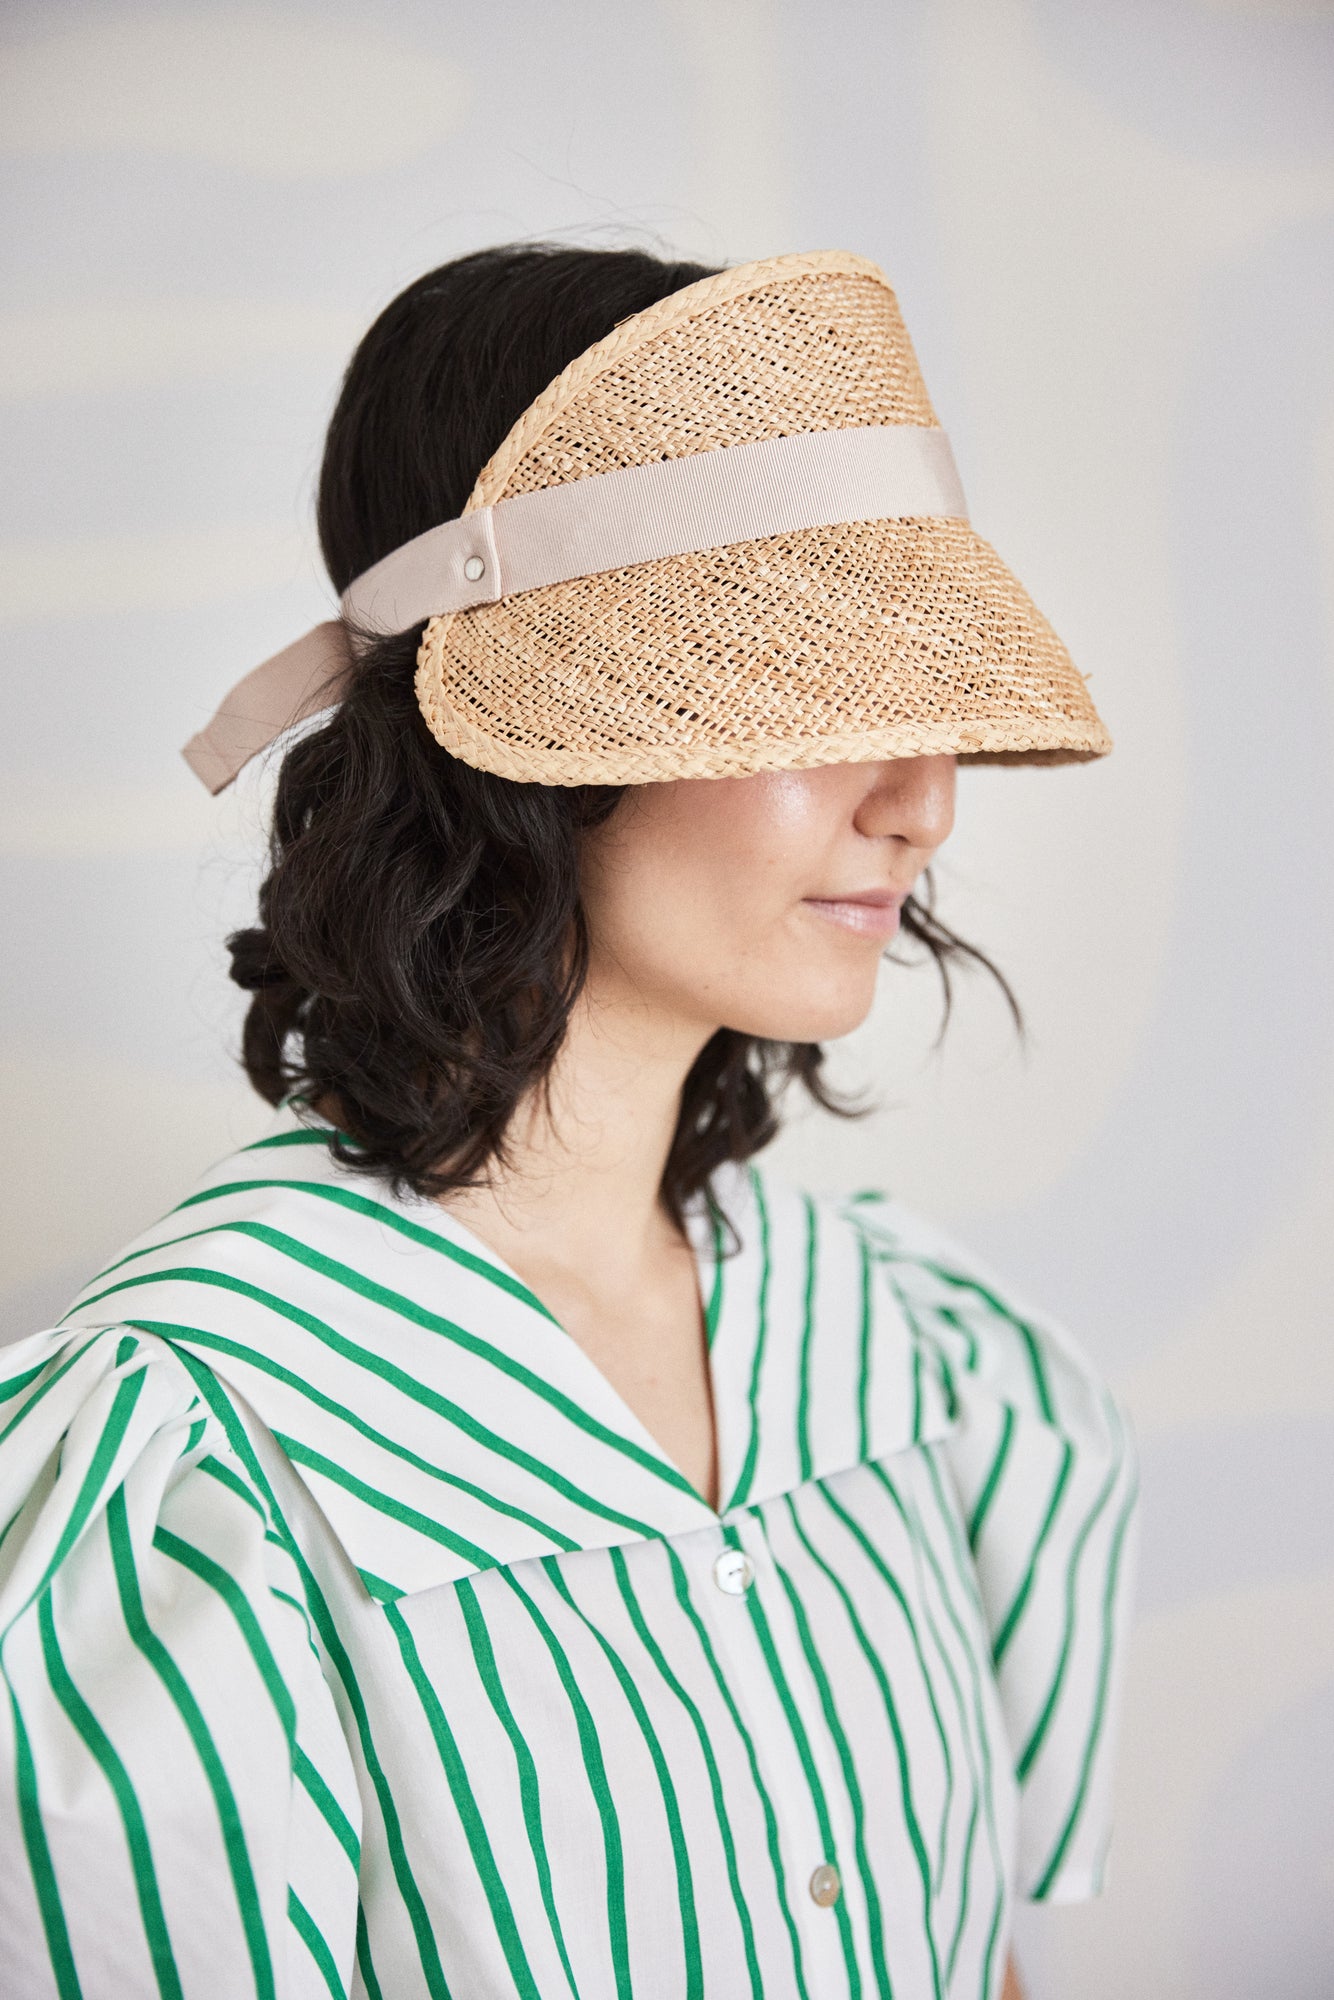 Arbor Sun Visor hat - Natural straw